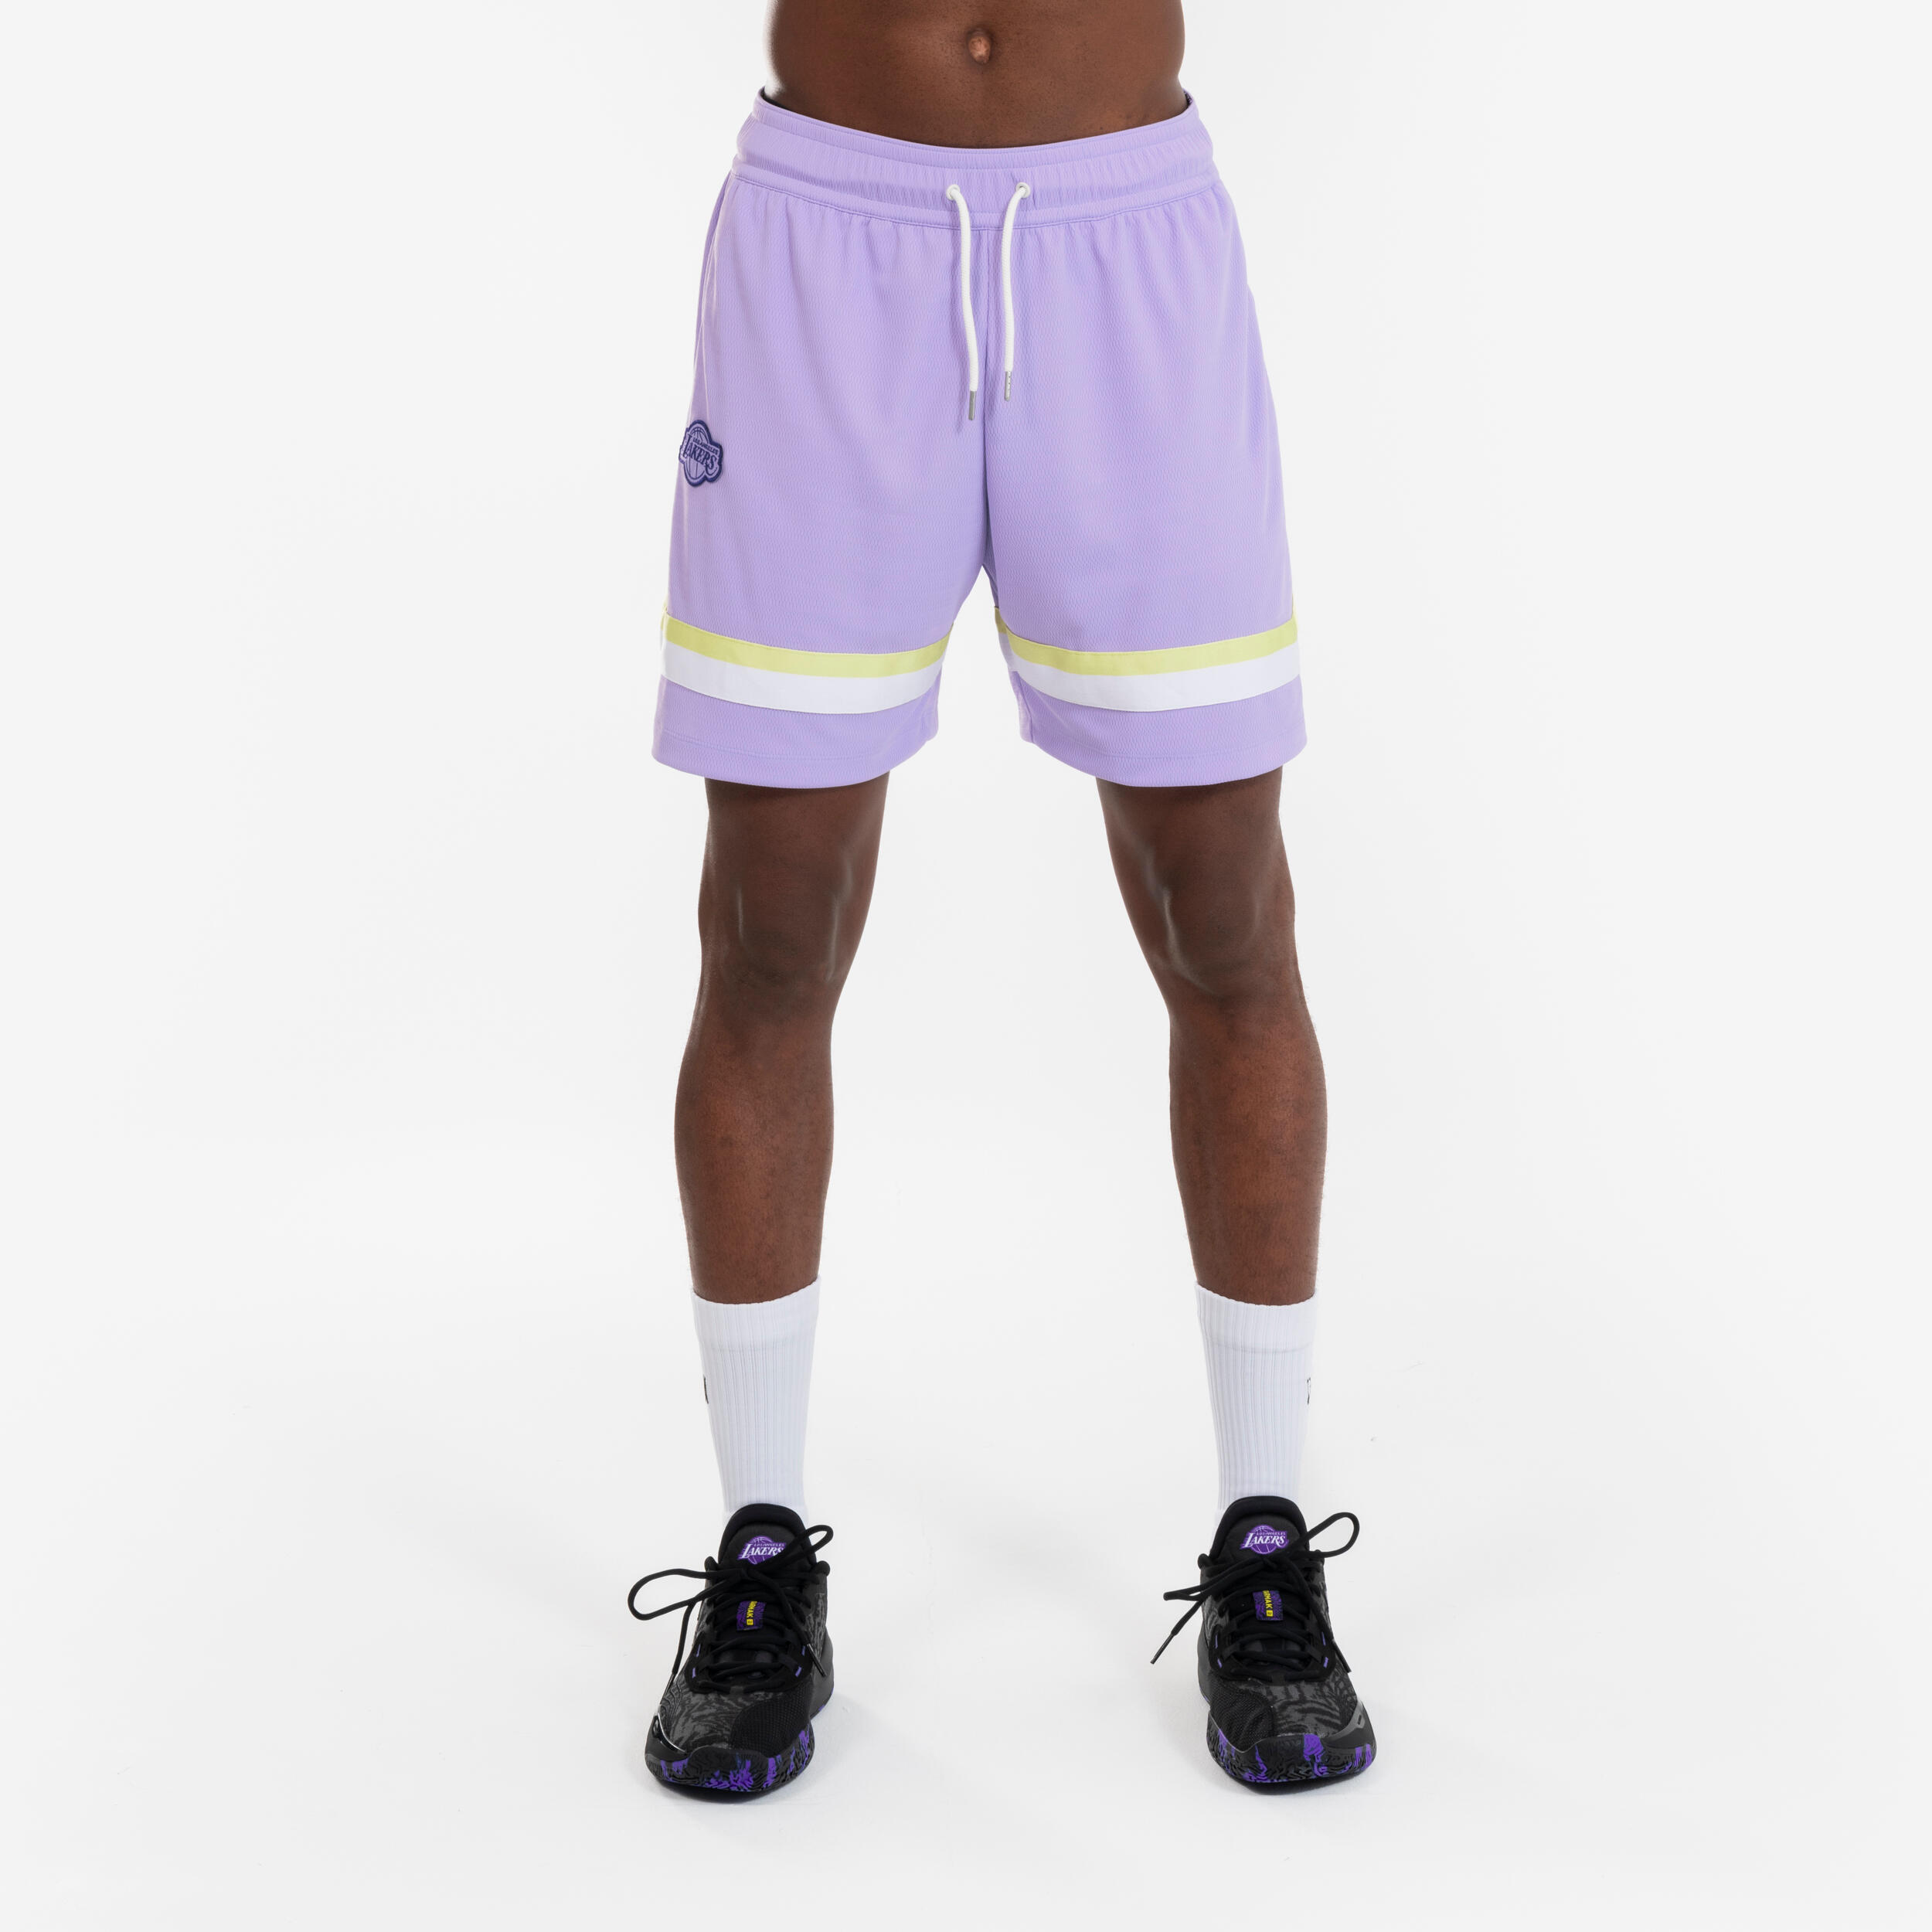 TARMAK Men's/Women's Basketball Shorts SH 900 NBA Lakers - Purple